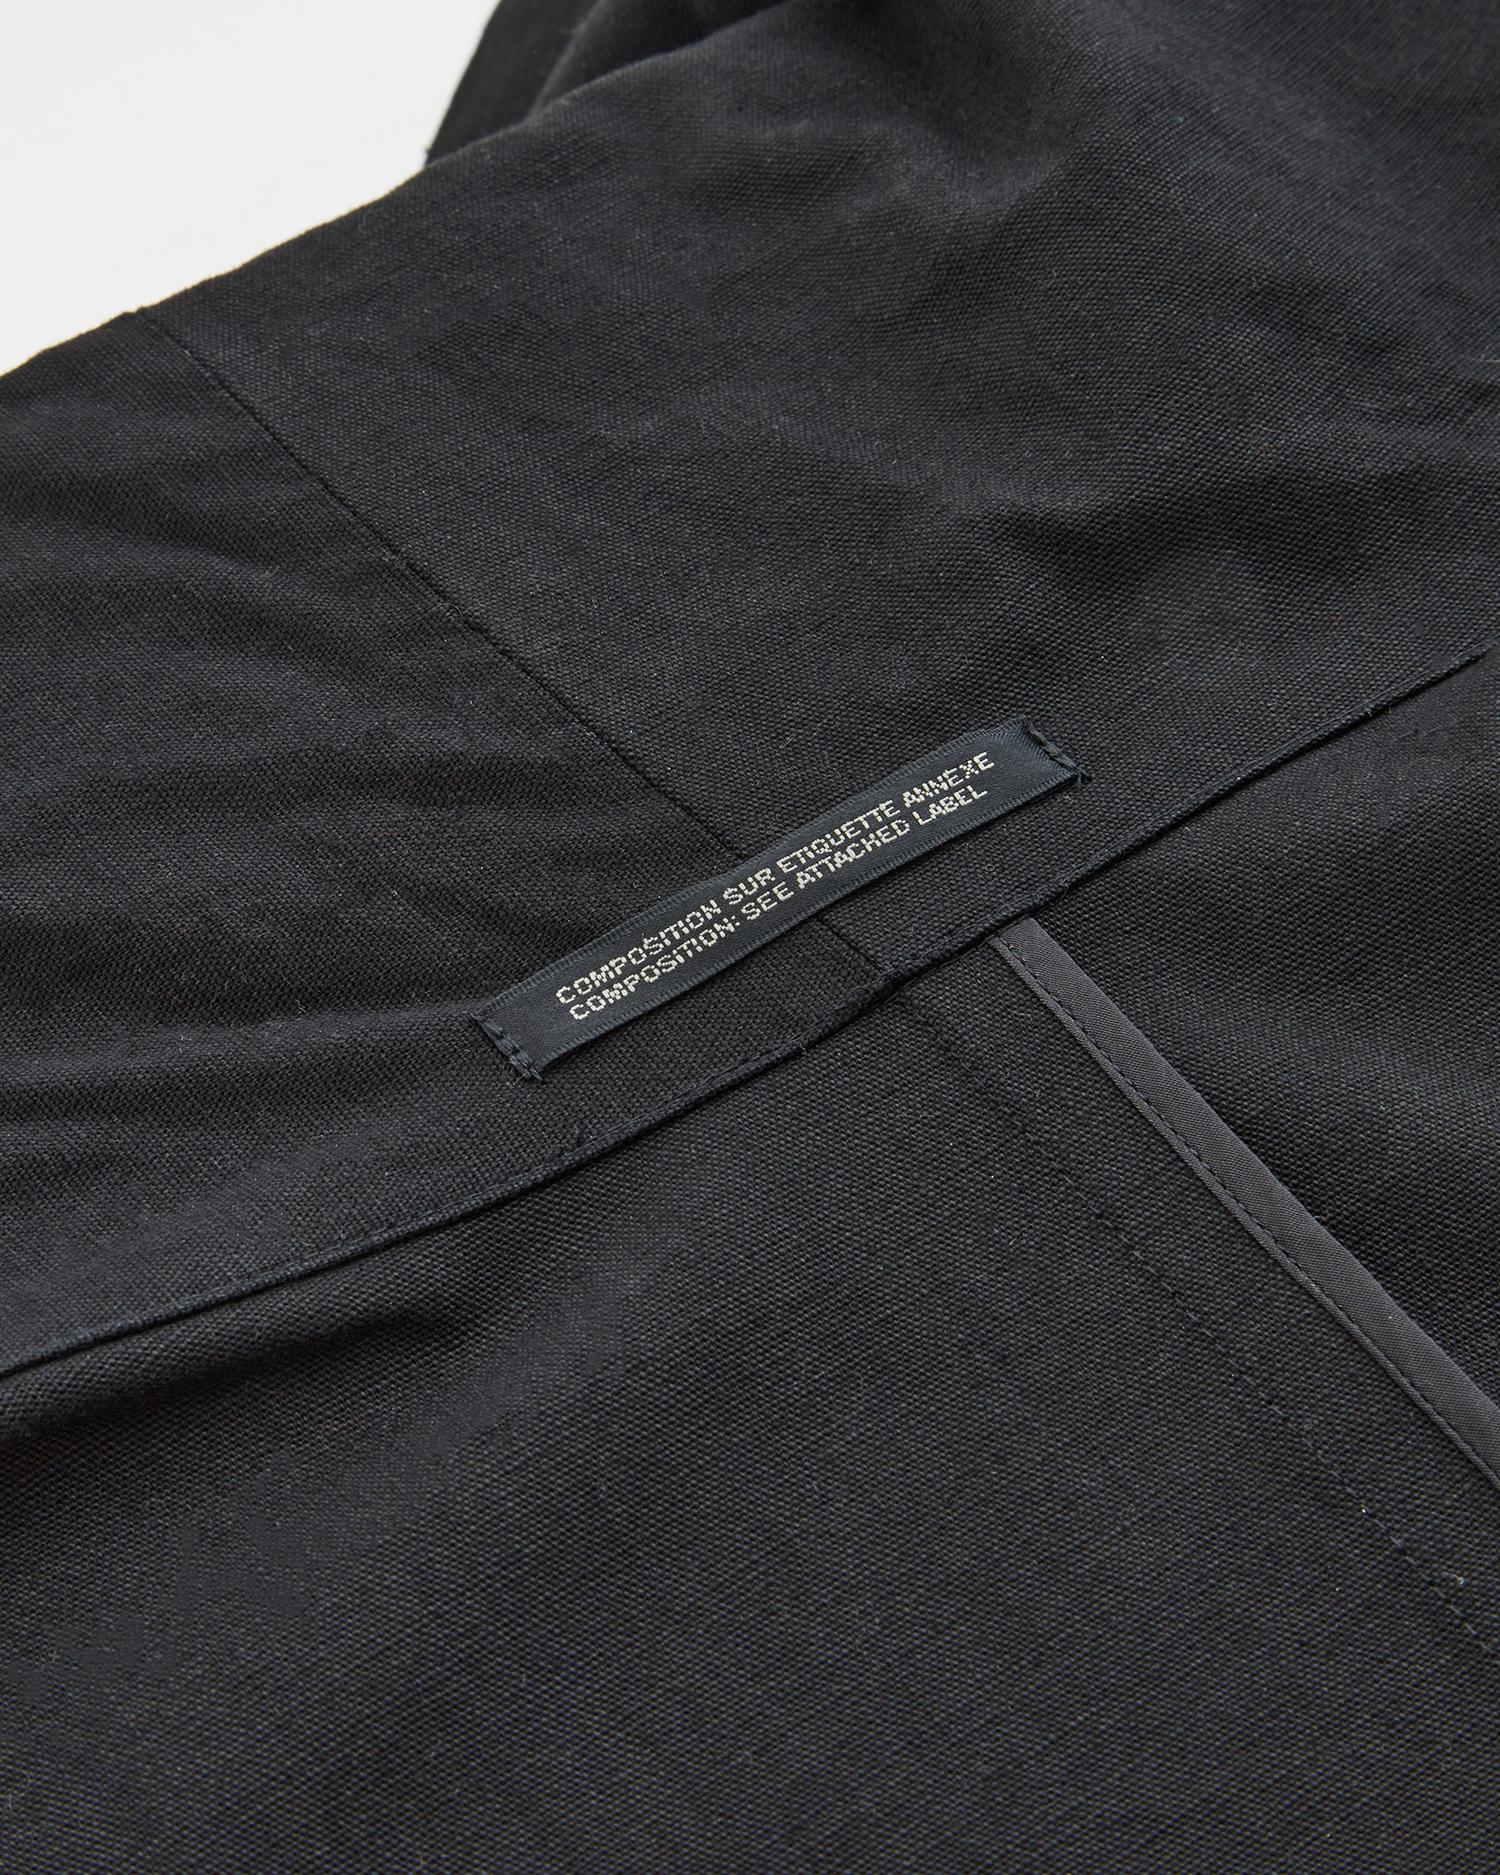 Yoshi Yamamoto Black cotton asymmetric cape, ss 2009 For Sale 1